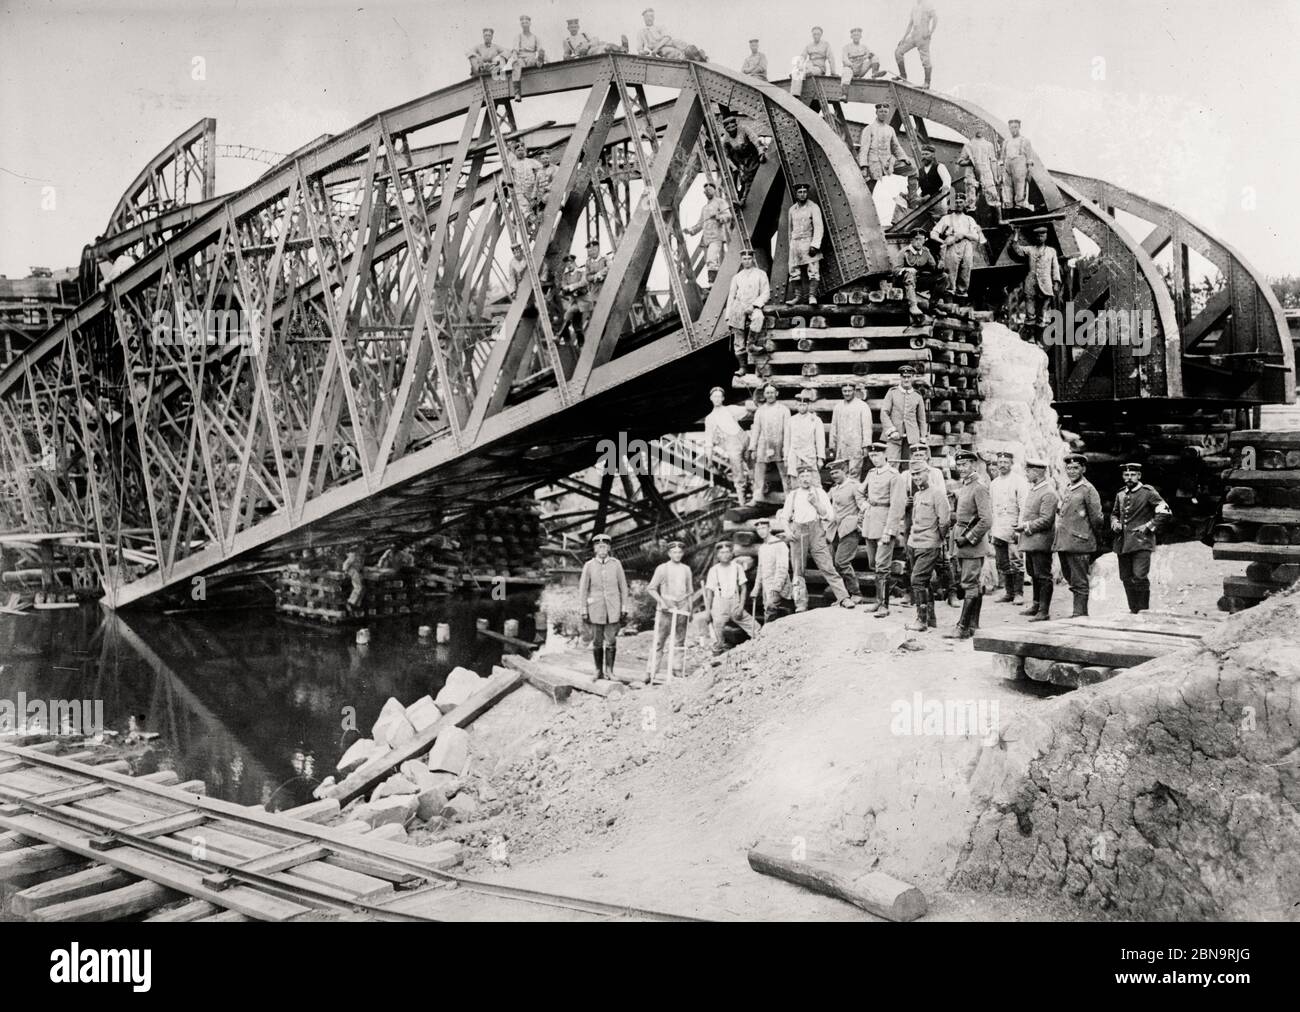 Photograph shows German soldiers on bridge at Lemberg, Austro-Hungarian Empire, (now Lviv, Ukraine), during World War I. Stock Photo